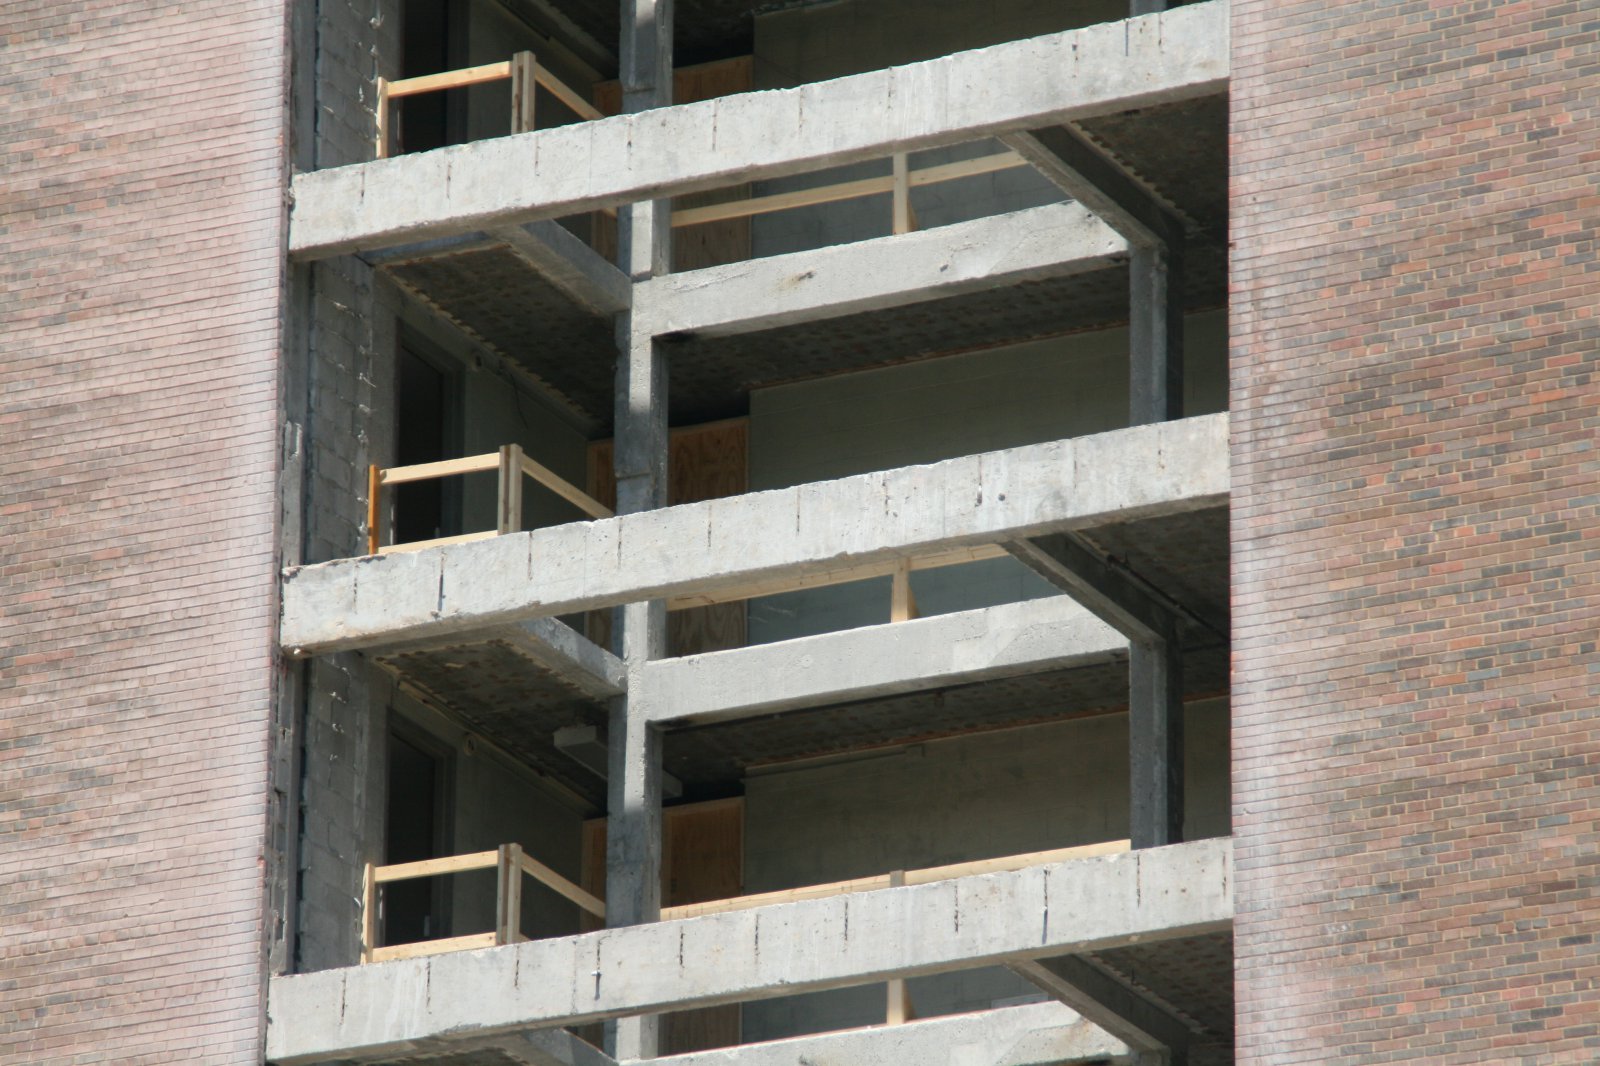 Roy W. Johnson Hall/Viets Tower Construction